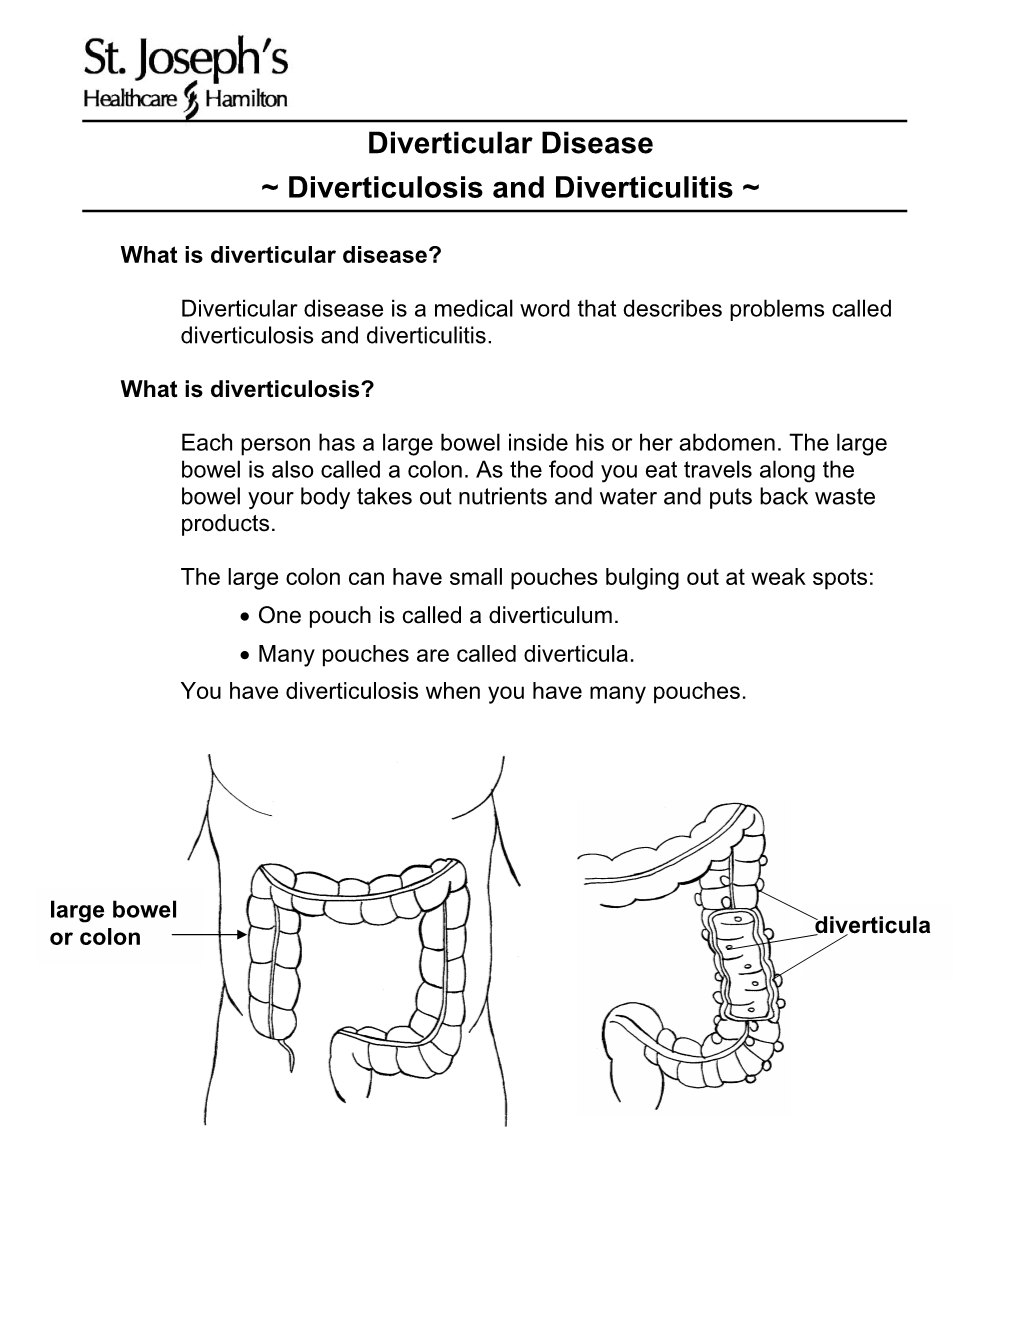 Diverticular Disease ~ Diverticulosis and Diverticulitis ~